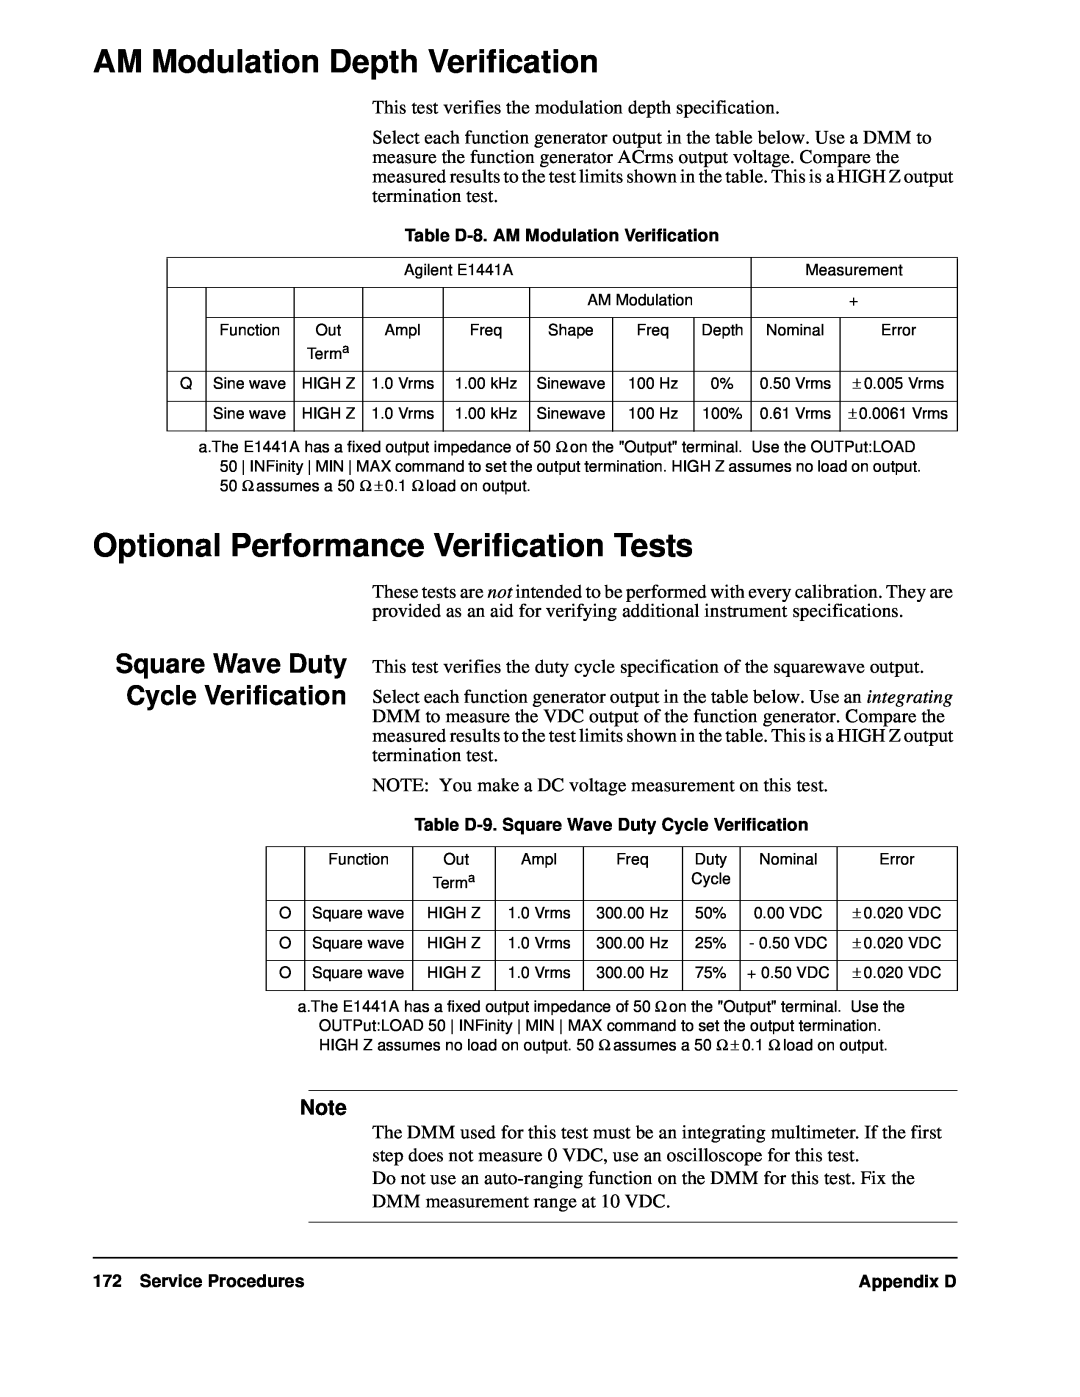 Agilent Technologies E1441A user service AM Modulation Depth Verification, Optional Performance Verification Tests 